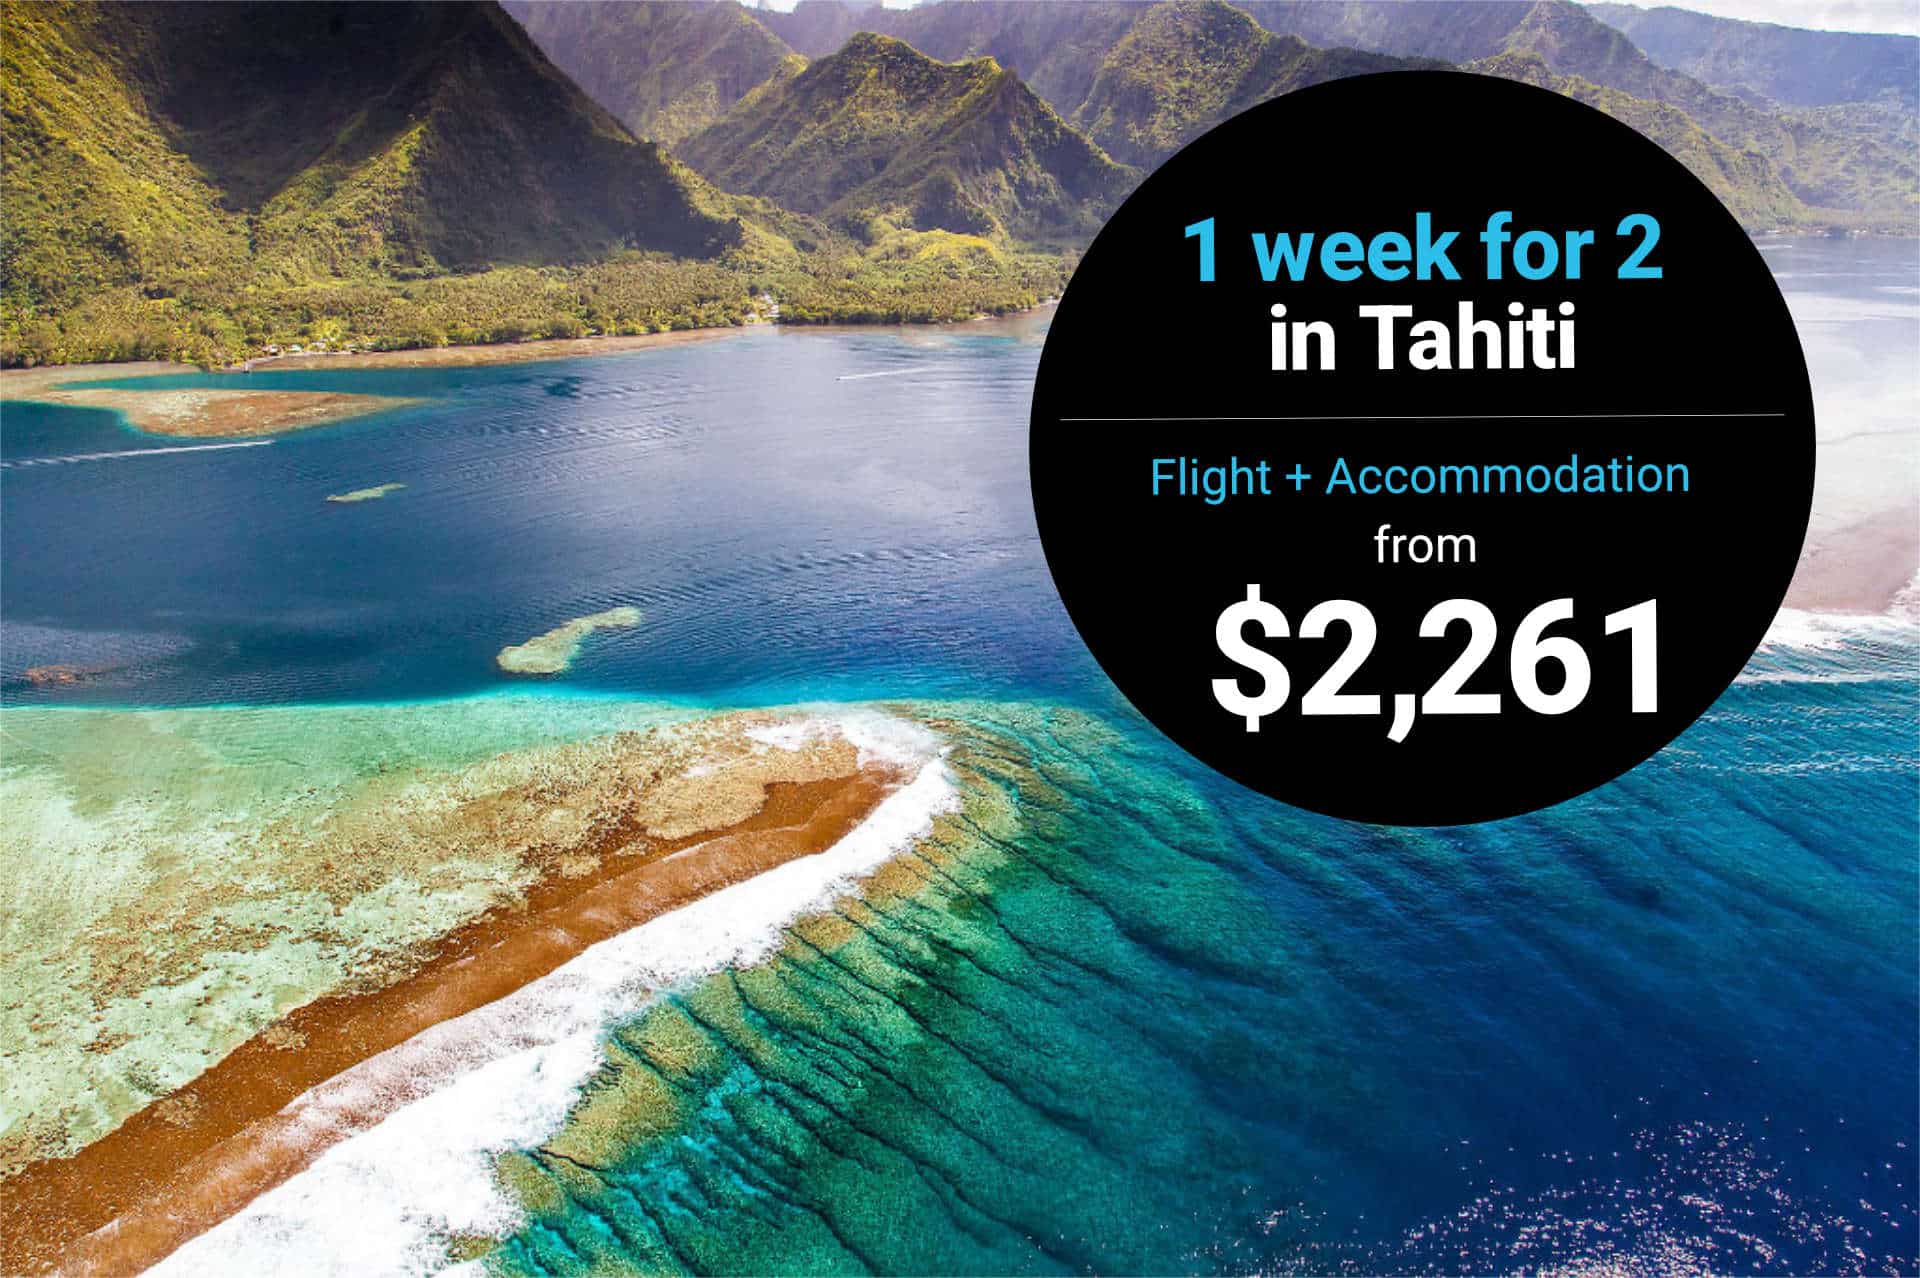 1 week for 2 travelers in Tahiti at low cost